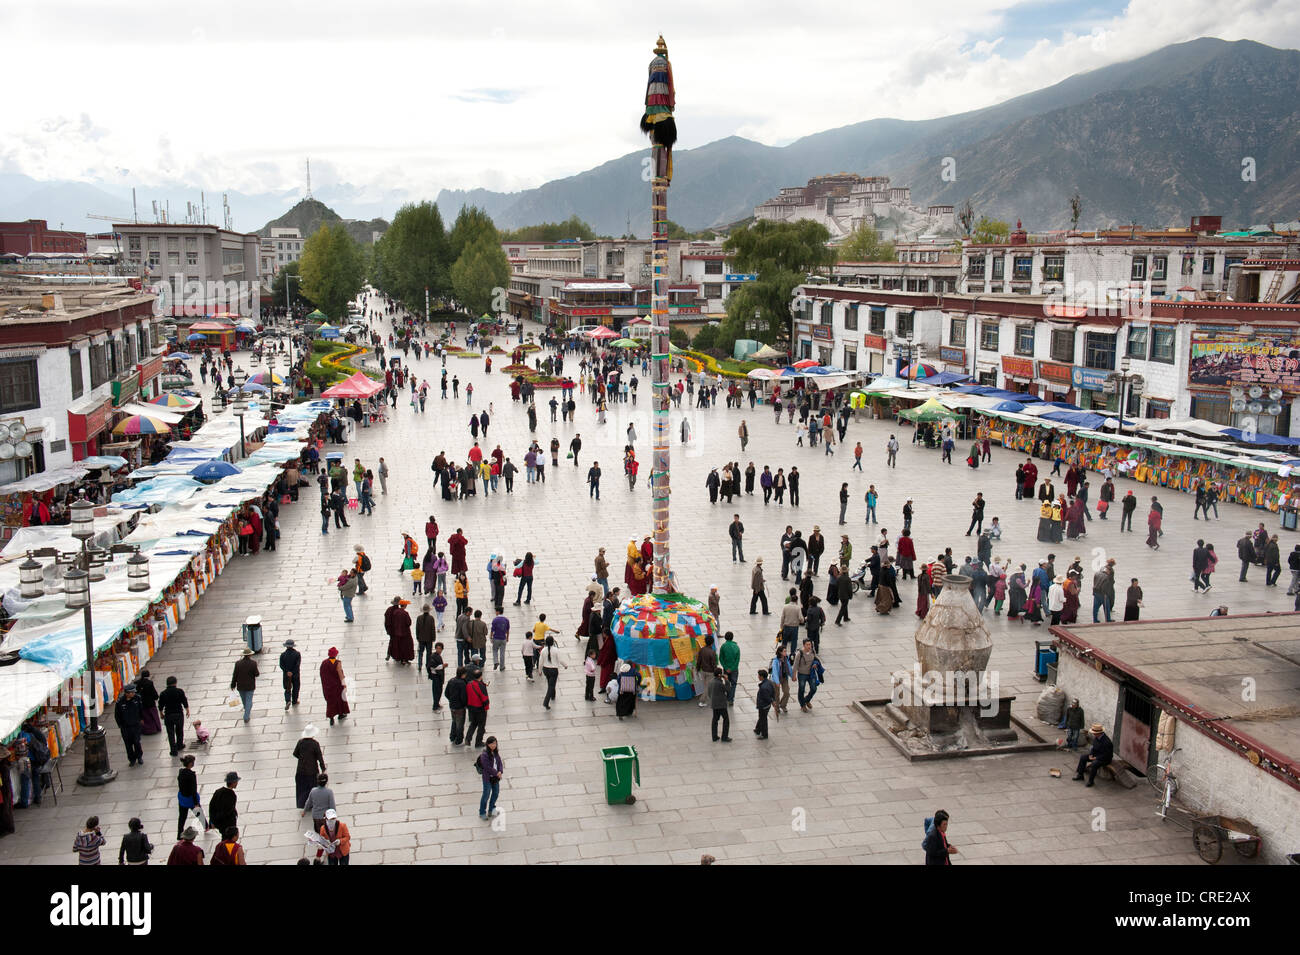 Vista desde el Jokhang templo en la plaza de Barkhor, Lhasa, Himalaya, Tíbet, China, Asia Foto de stock